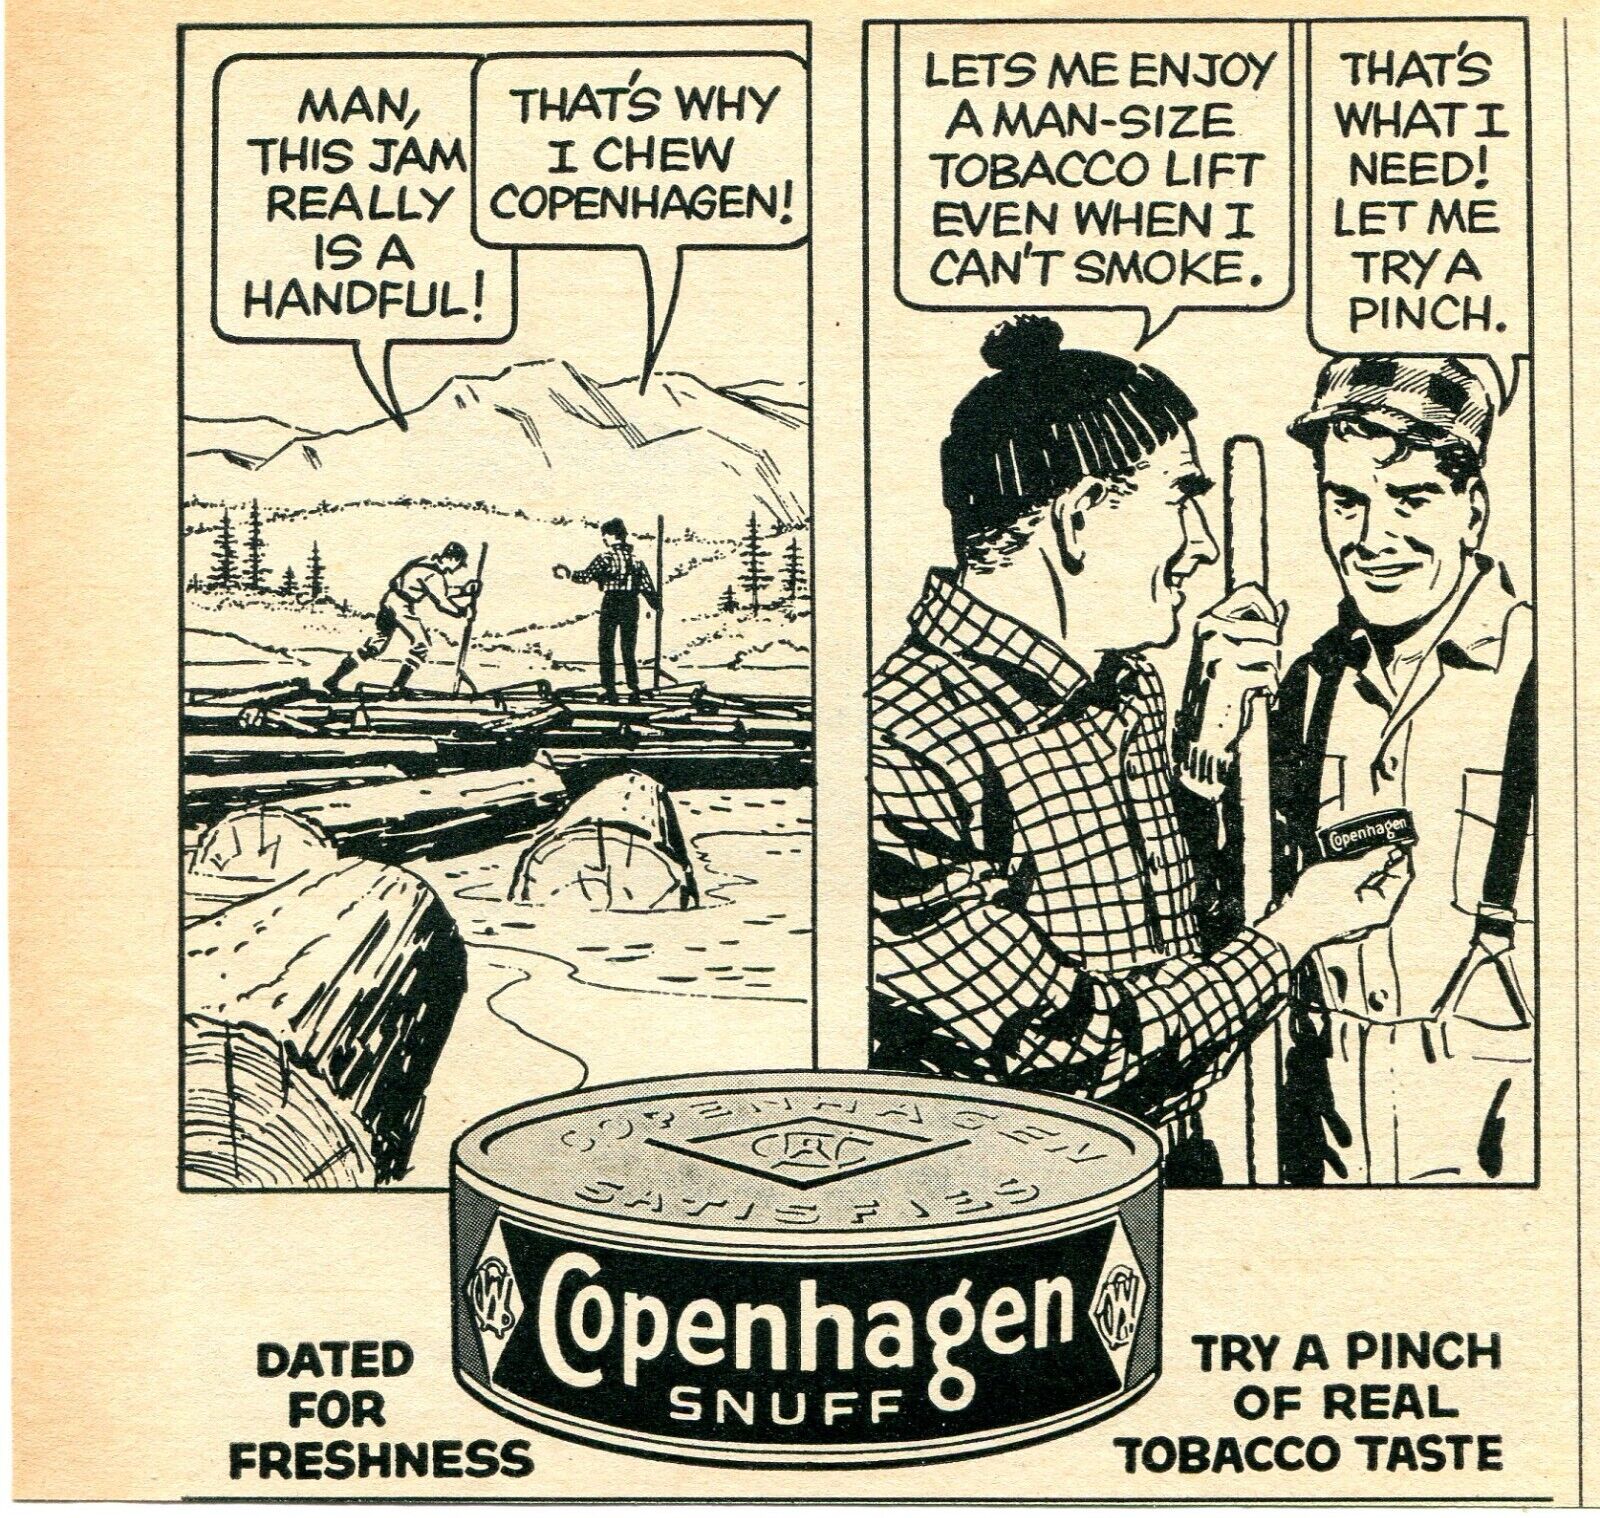 1964 small Print Ad of Copenhagen Smokeless Tobacco man-size tobacco loggers